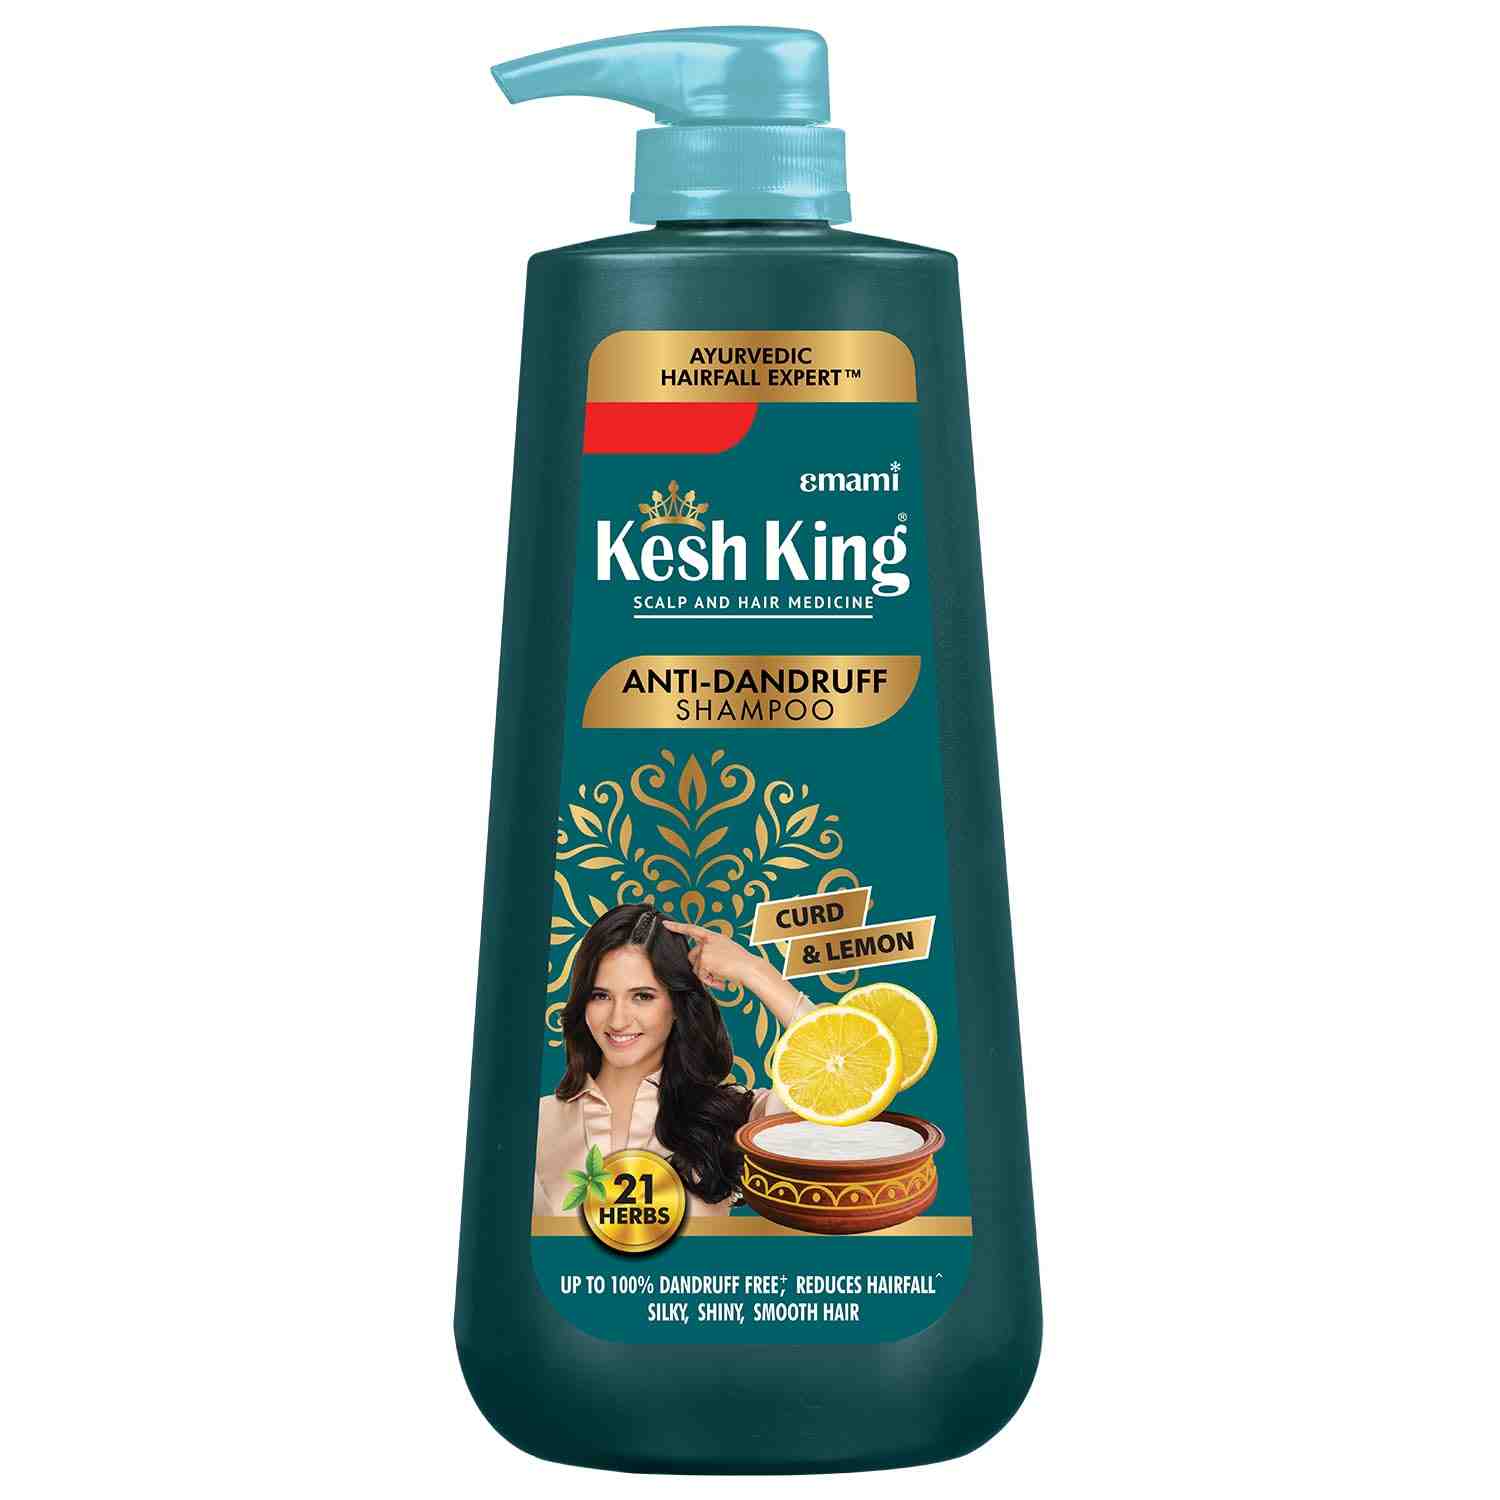 Emami Kesh King Scalp And Hair Medicine Anti Dandruff Shampoo (340Ml)